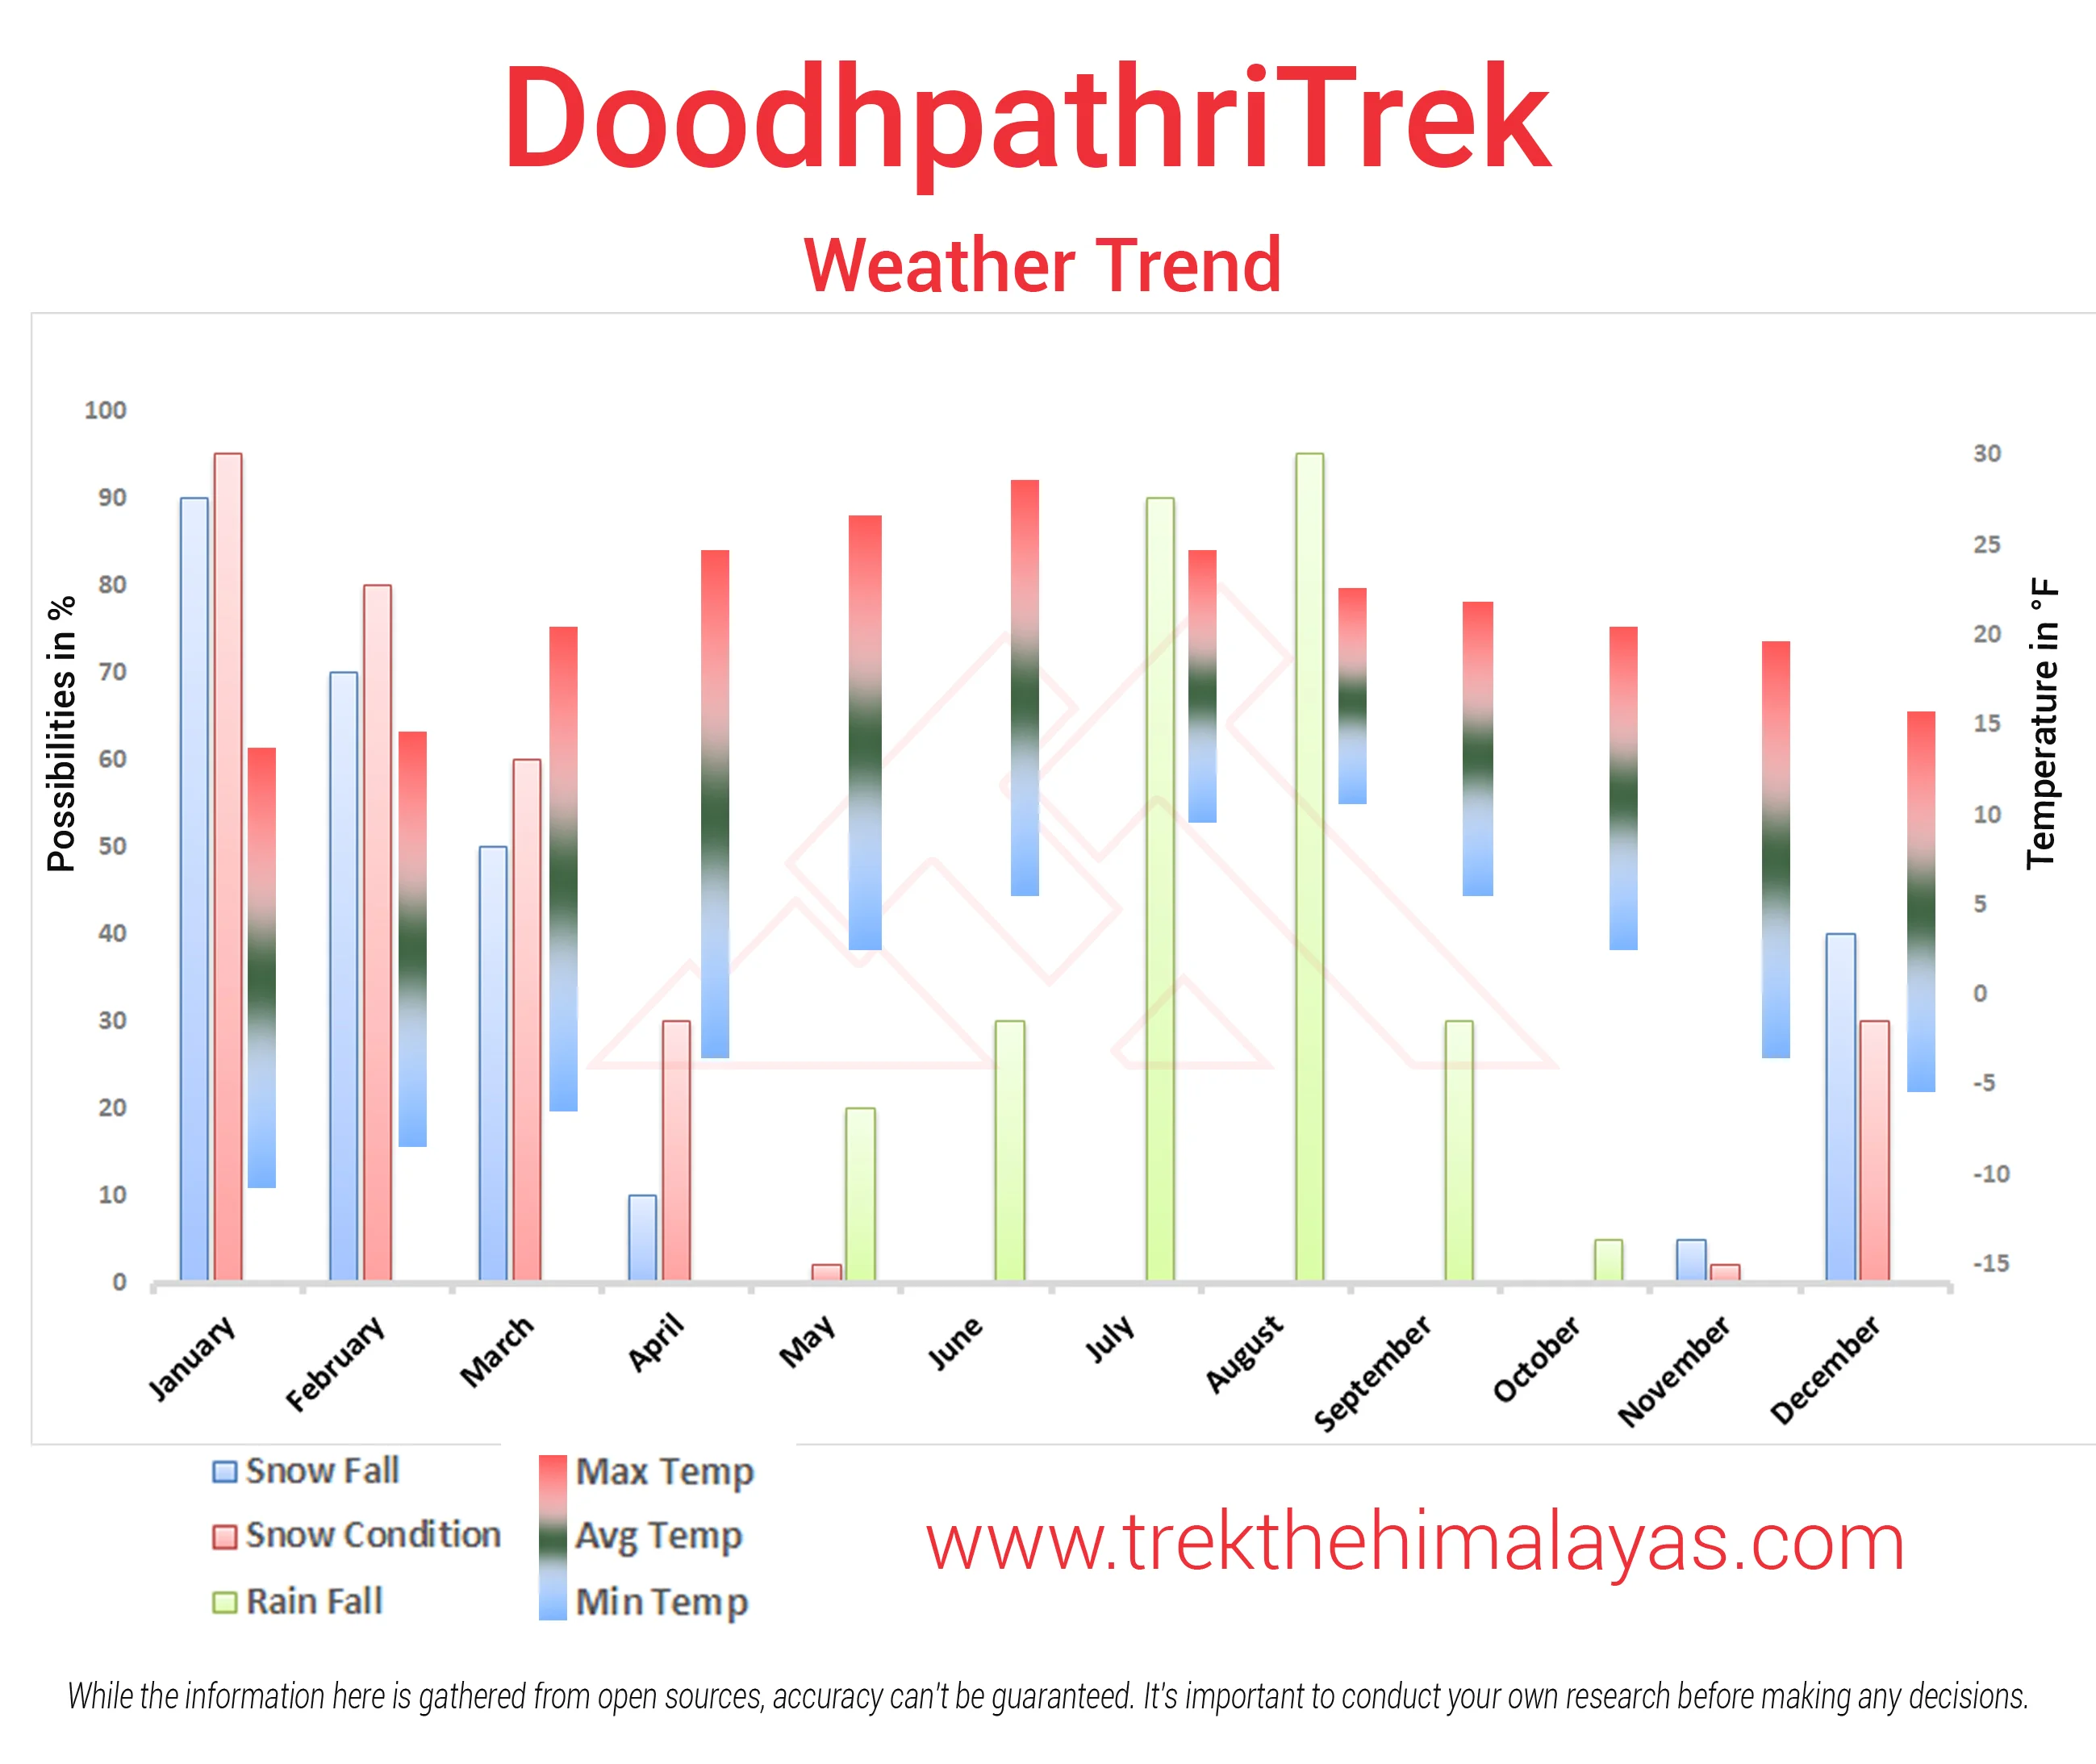 Doodhpathri Trek Maps